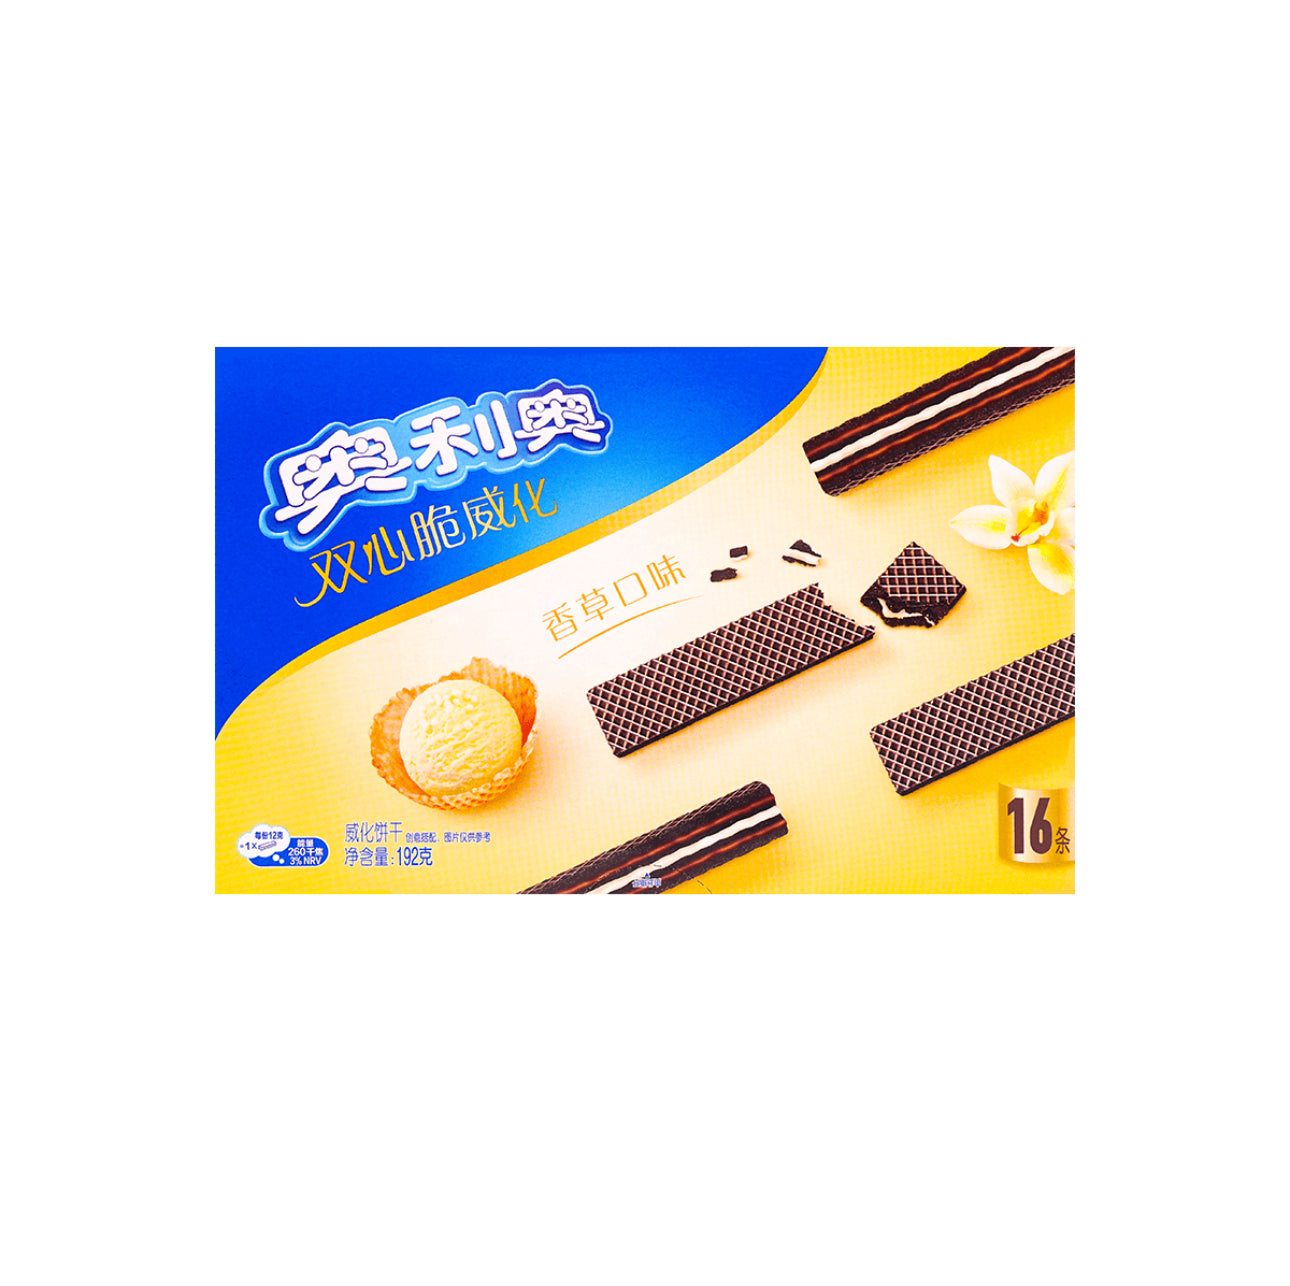 Oreo Double Crisp Vanilla Cream
Chocolate Wafers - 16 Pieces, 6.77oz